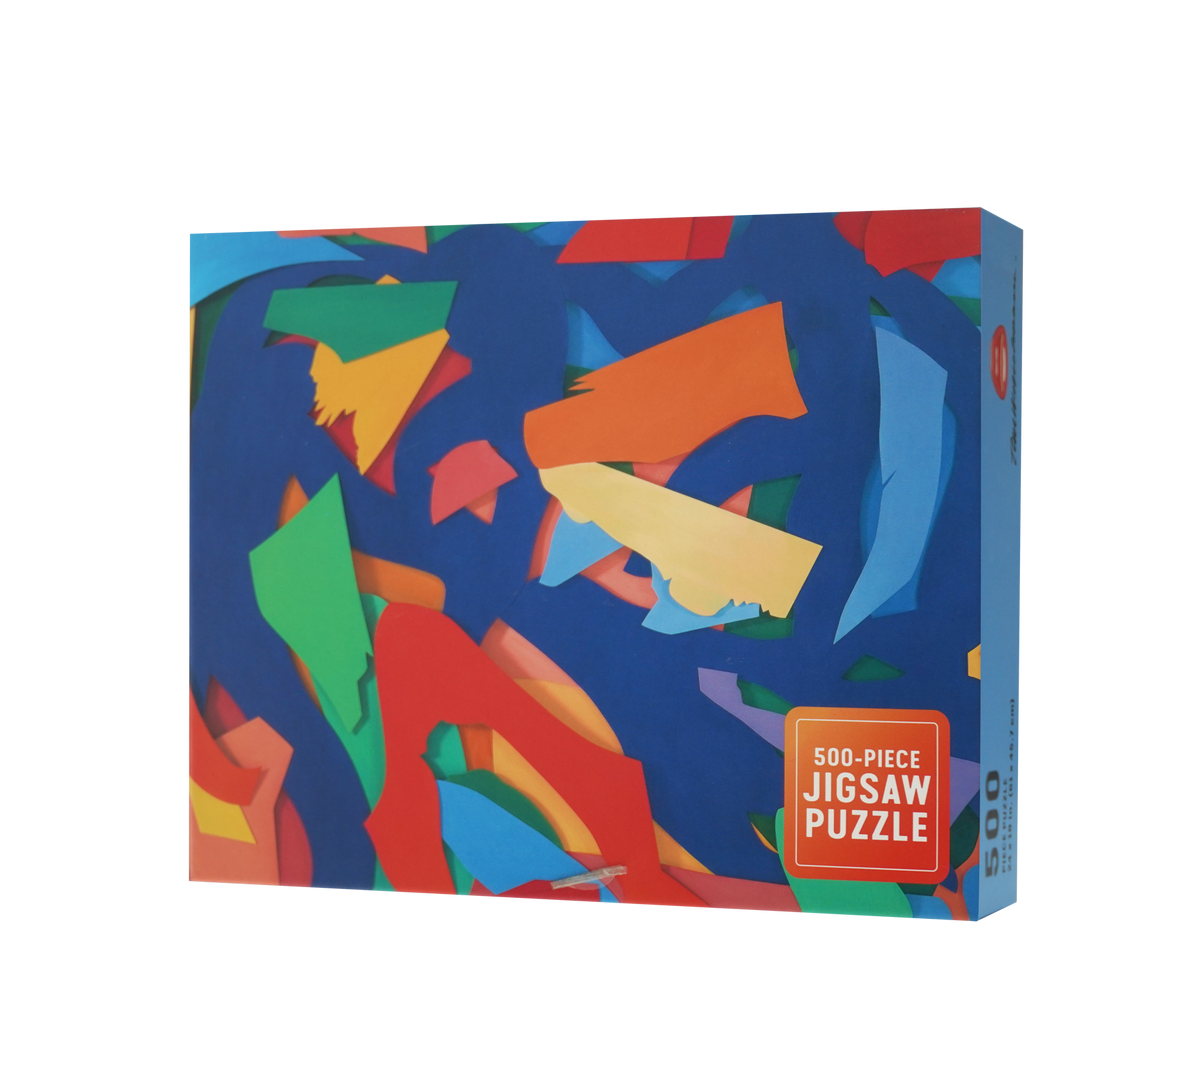 Tom Wesselmann "Blue Dance" 500-Piece Jigsaw Puzzle